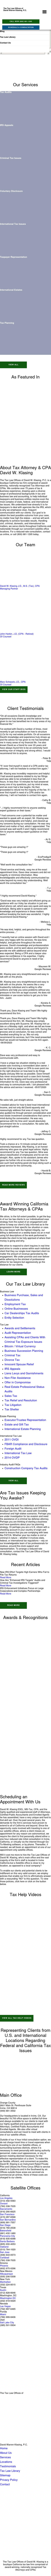 Tax Law Offices of David W. Klasing - San Diego CA Lawyers